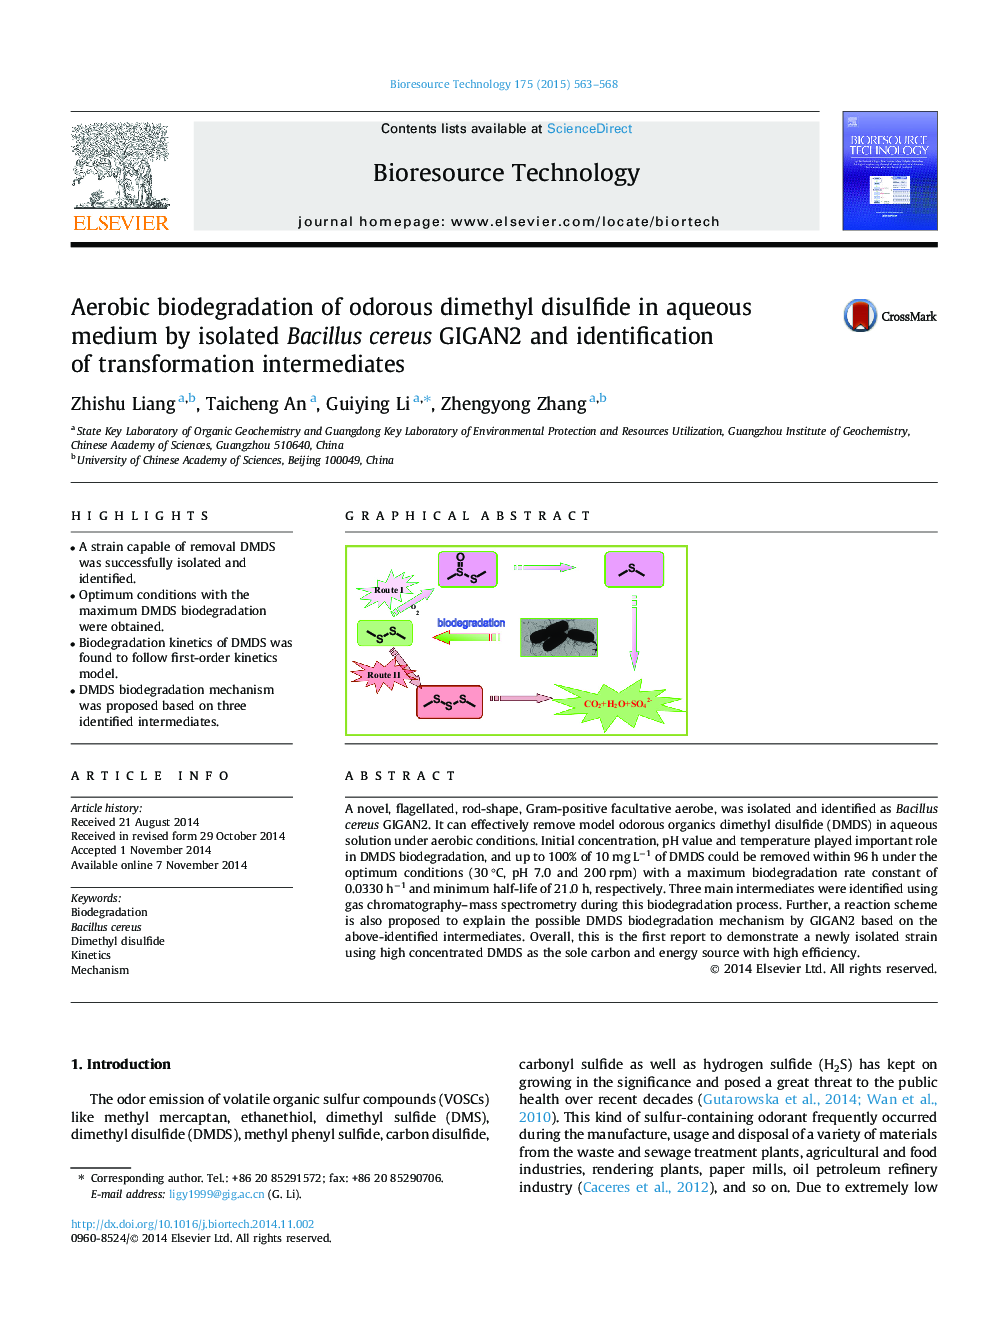 Aerobic biodegradation of odorous dimethyl disulfide in aqueous medium by isolated Bacillus cereus GIGAN2 and identification of transformation intermediates